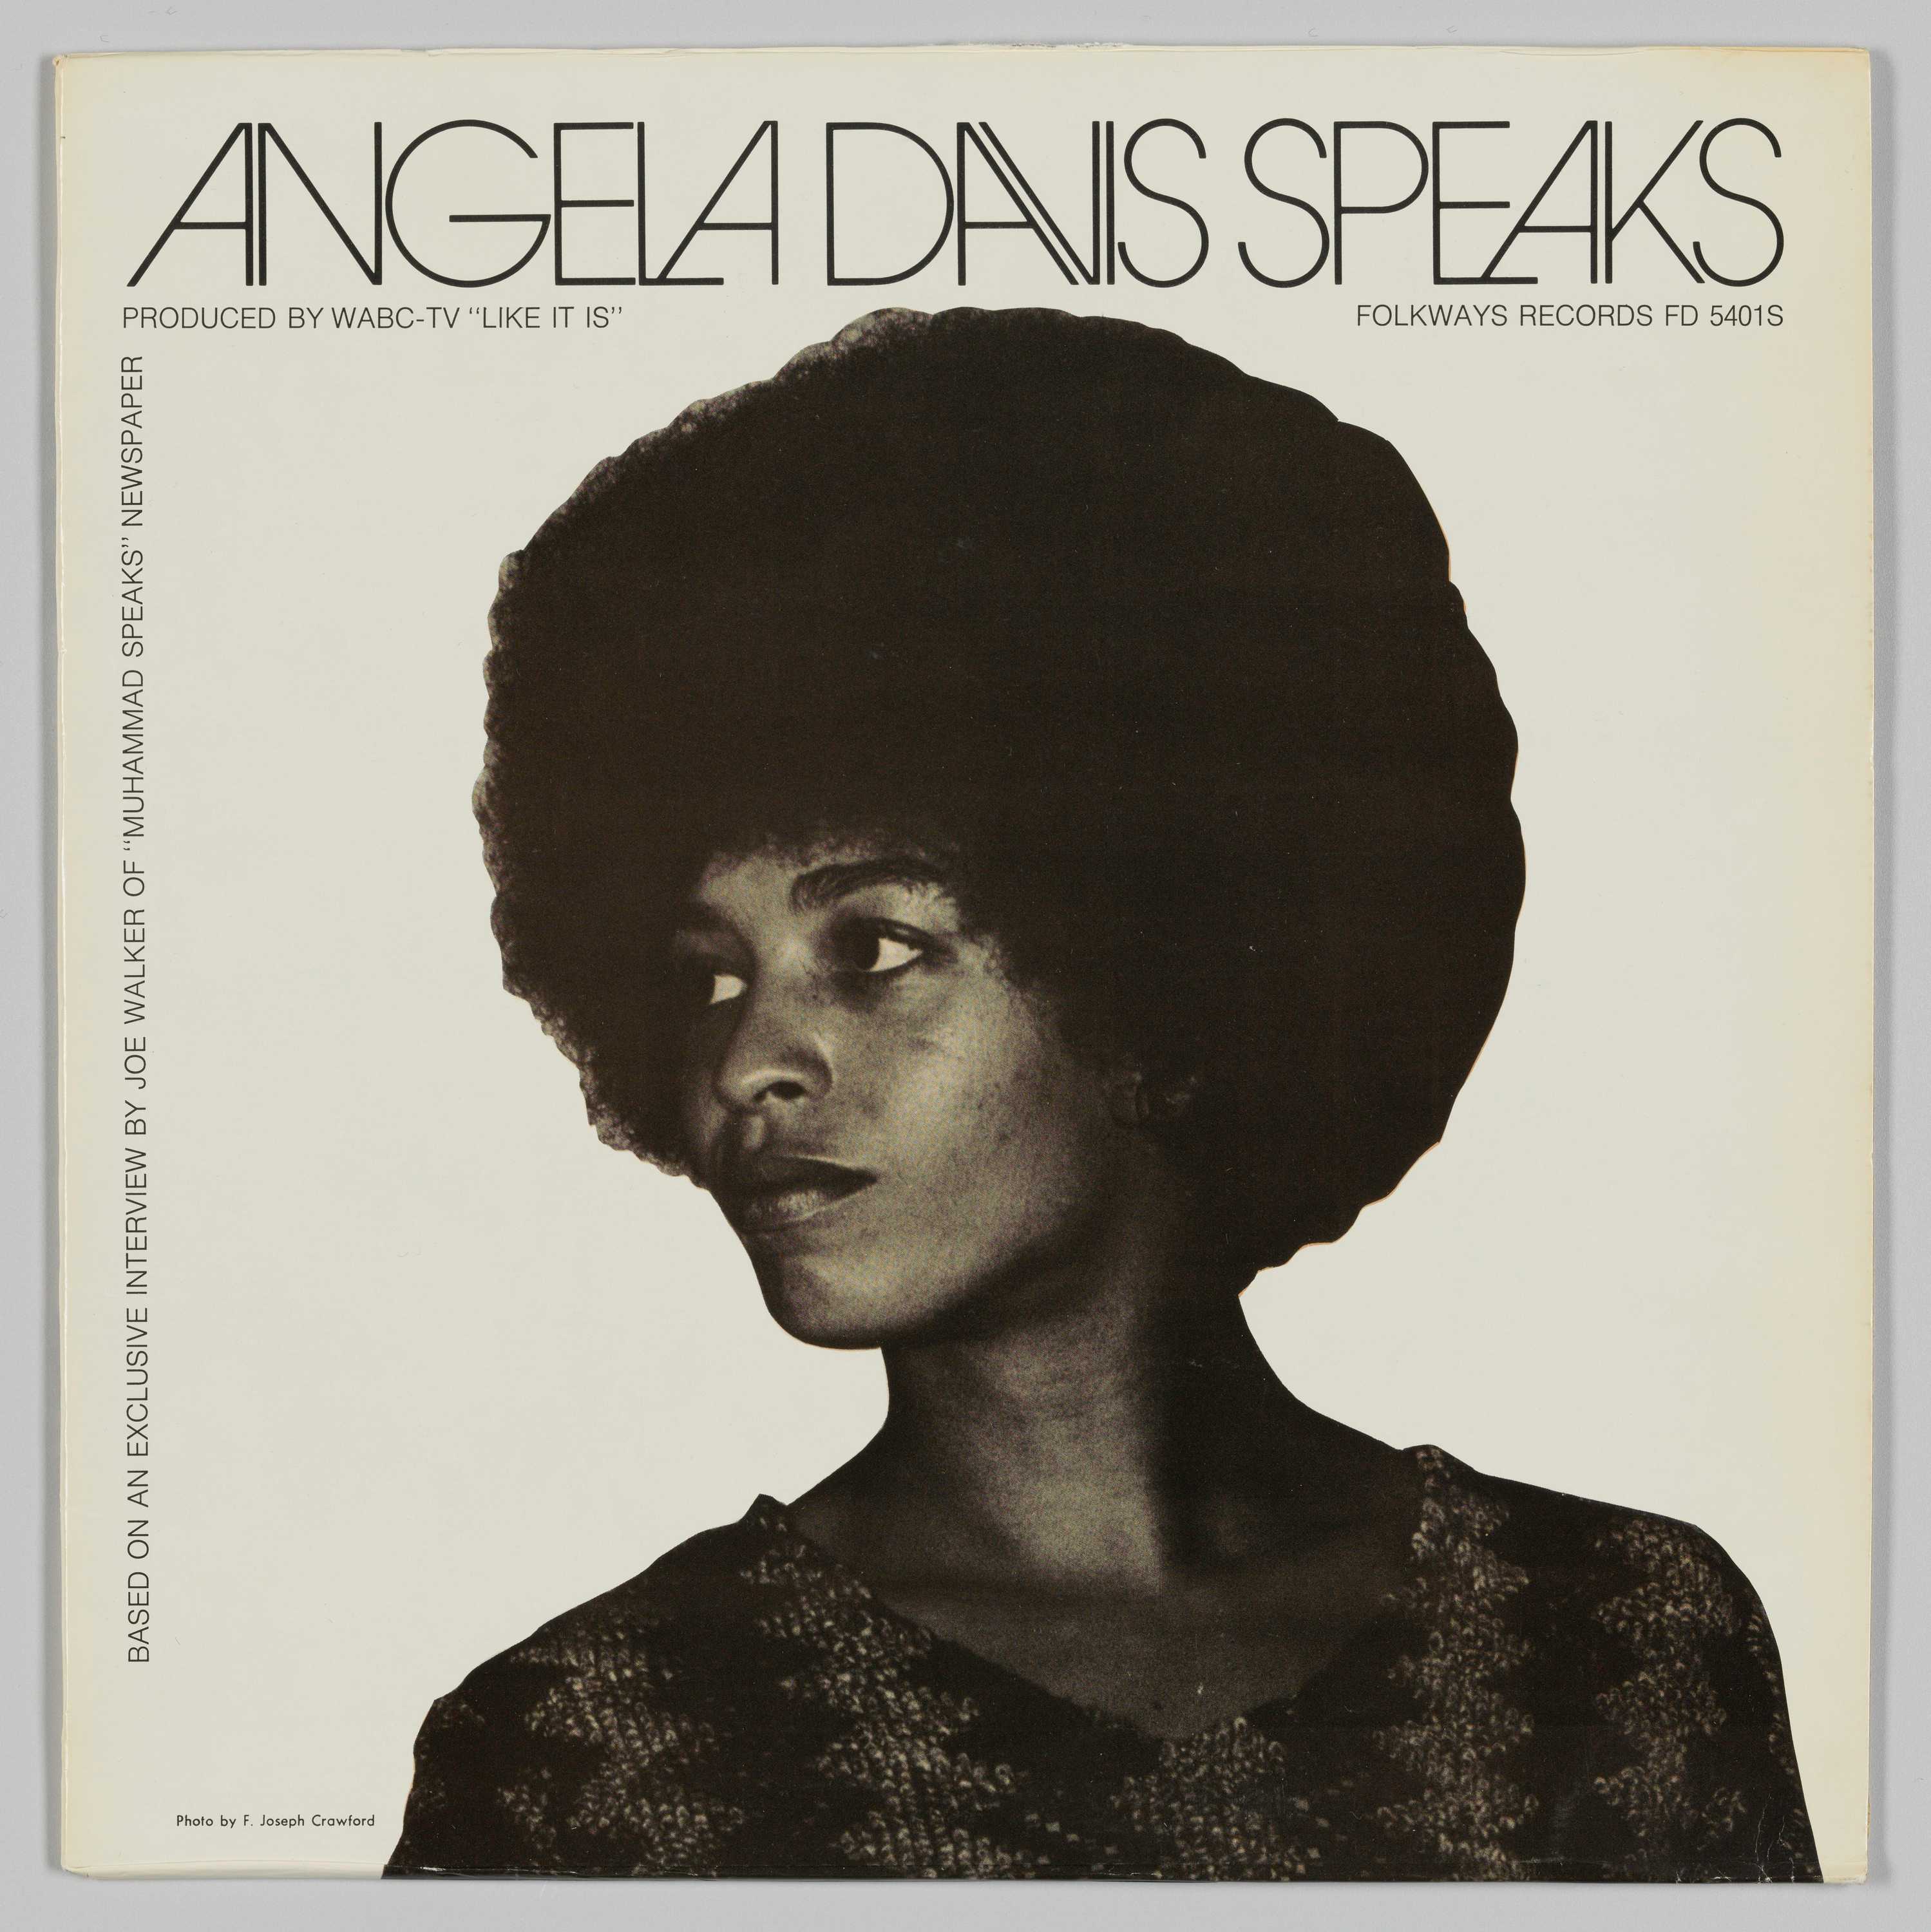 Image of the album jacket for Angela Davis's record "Angela Davis Speaks" featuring a photograph of Angela Davis.